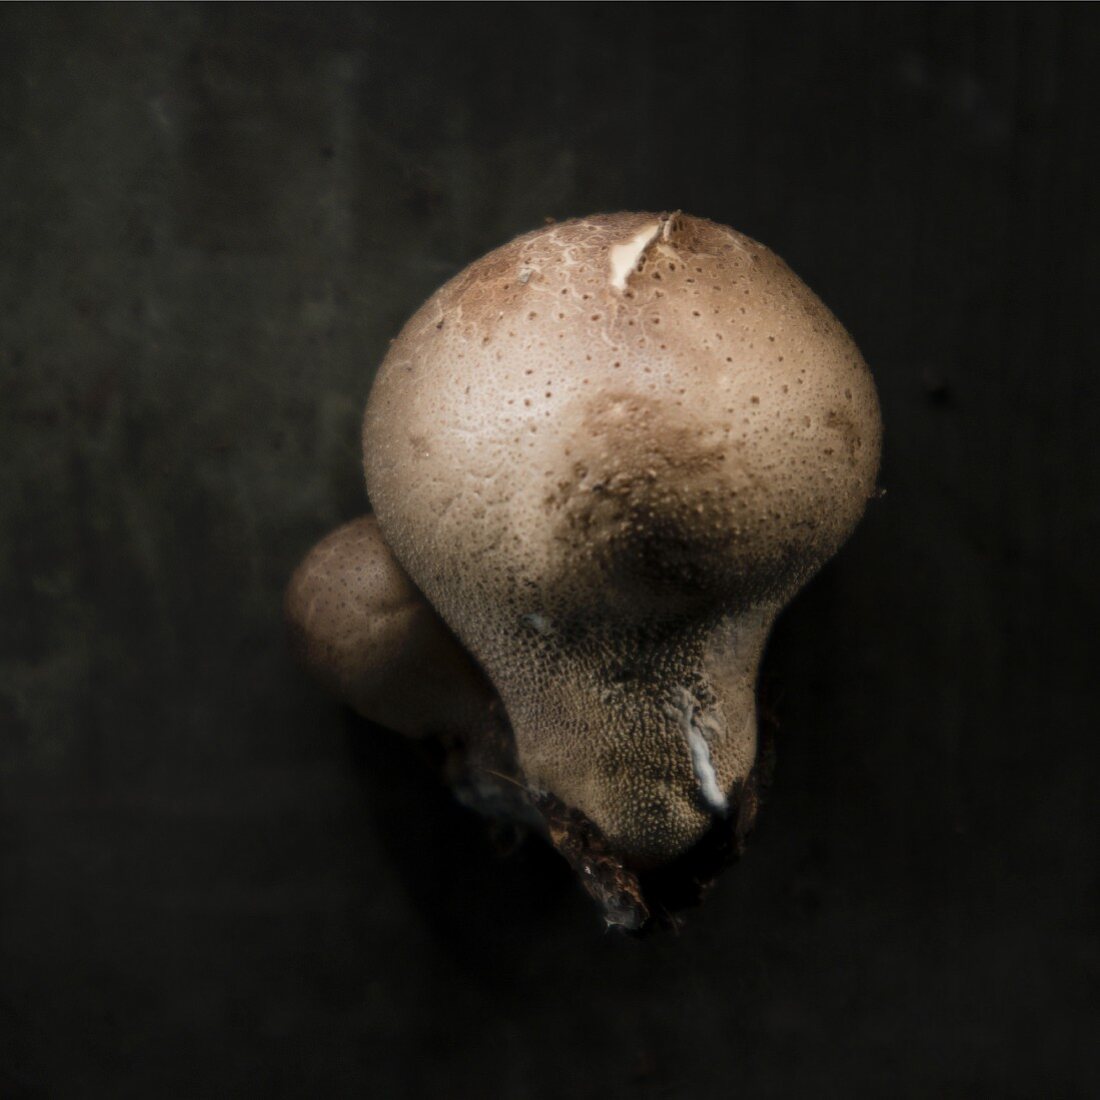 A whole puffball mushroom against a black background